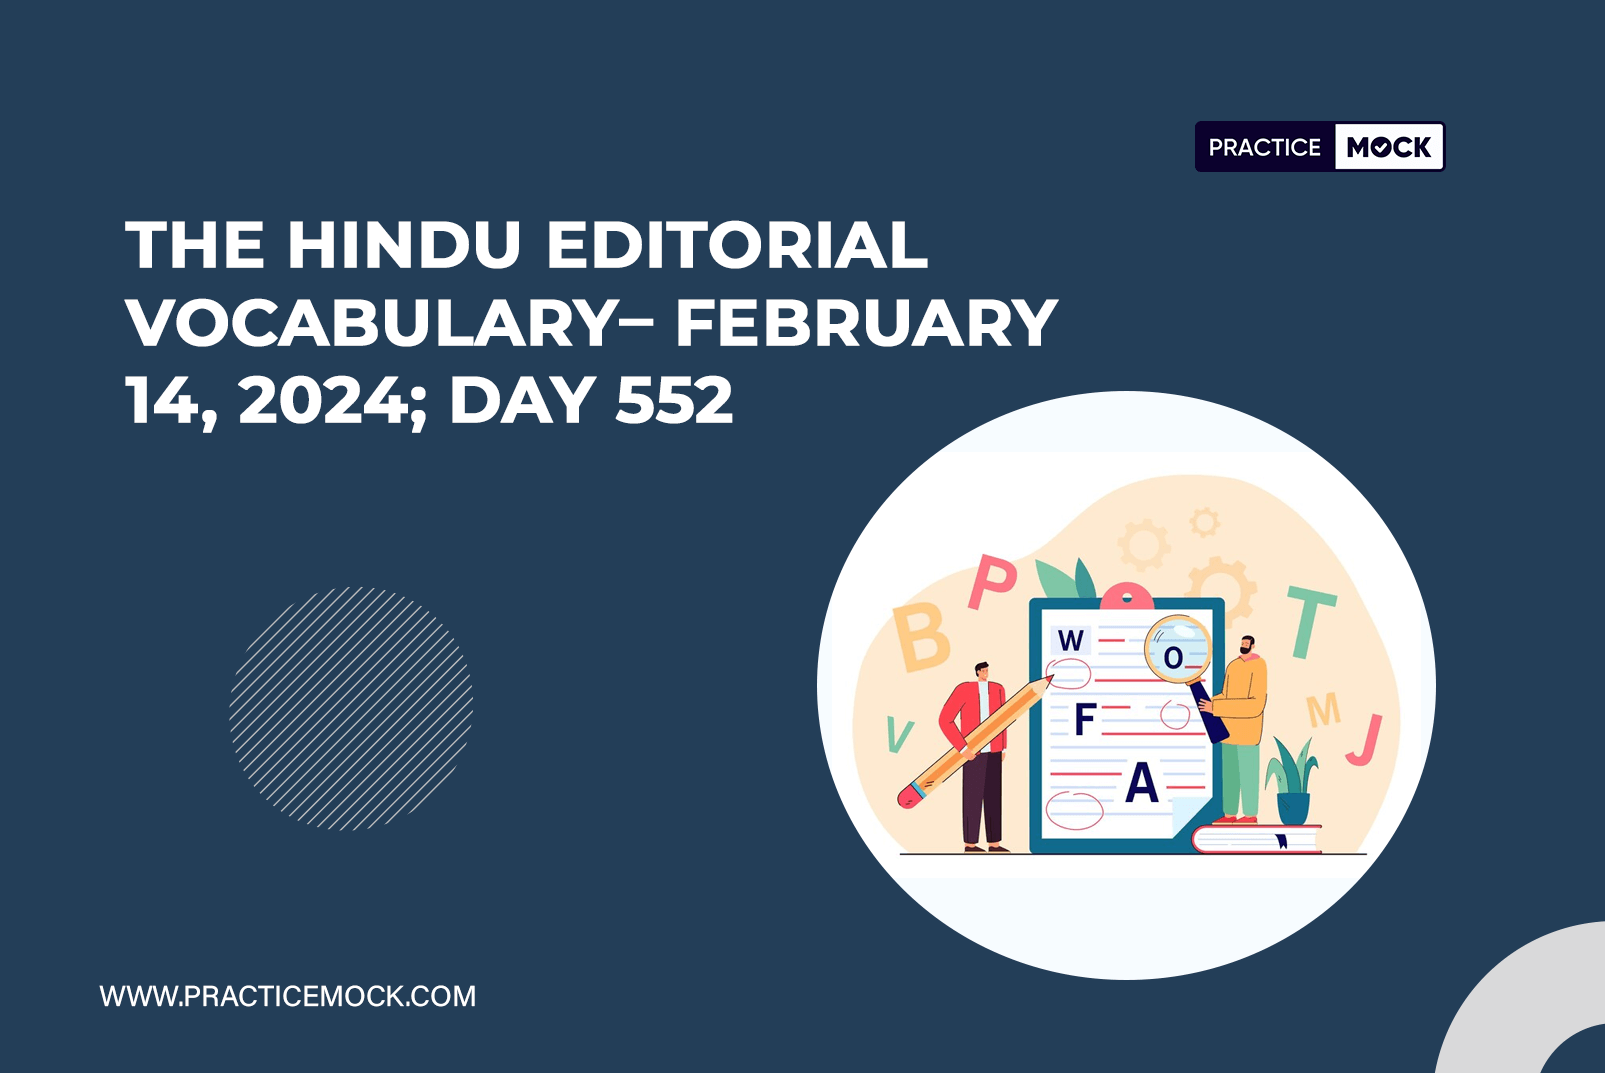 The Hindu Editorial Vocabulary– February 14, 2024; Day 552